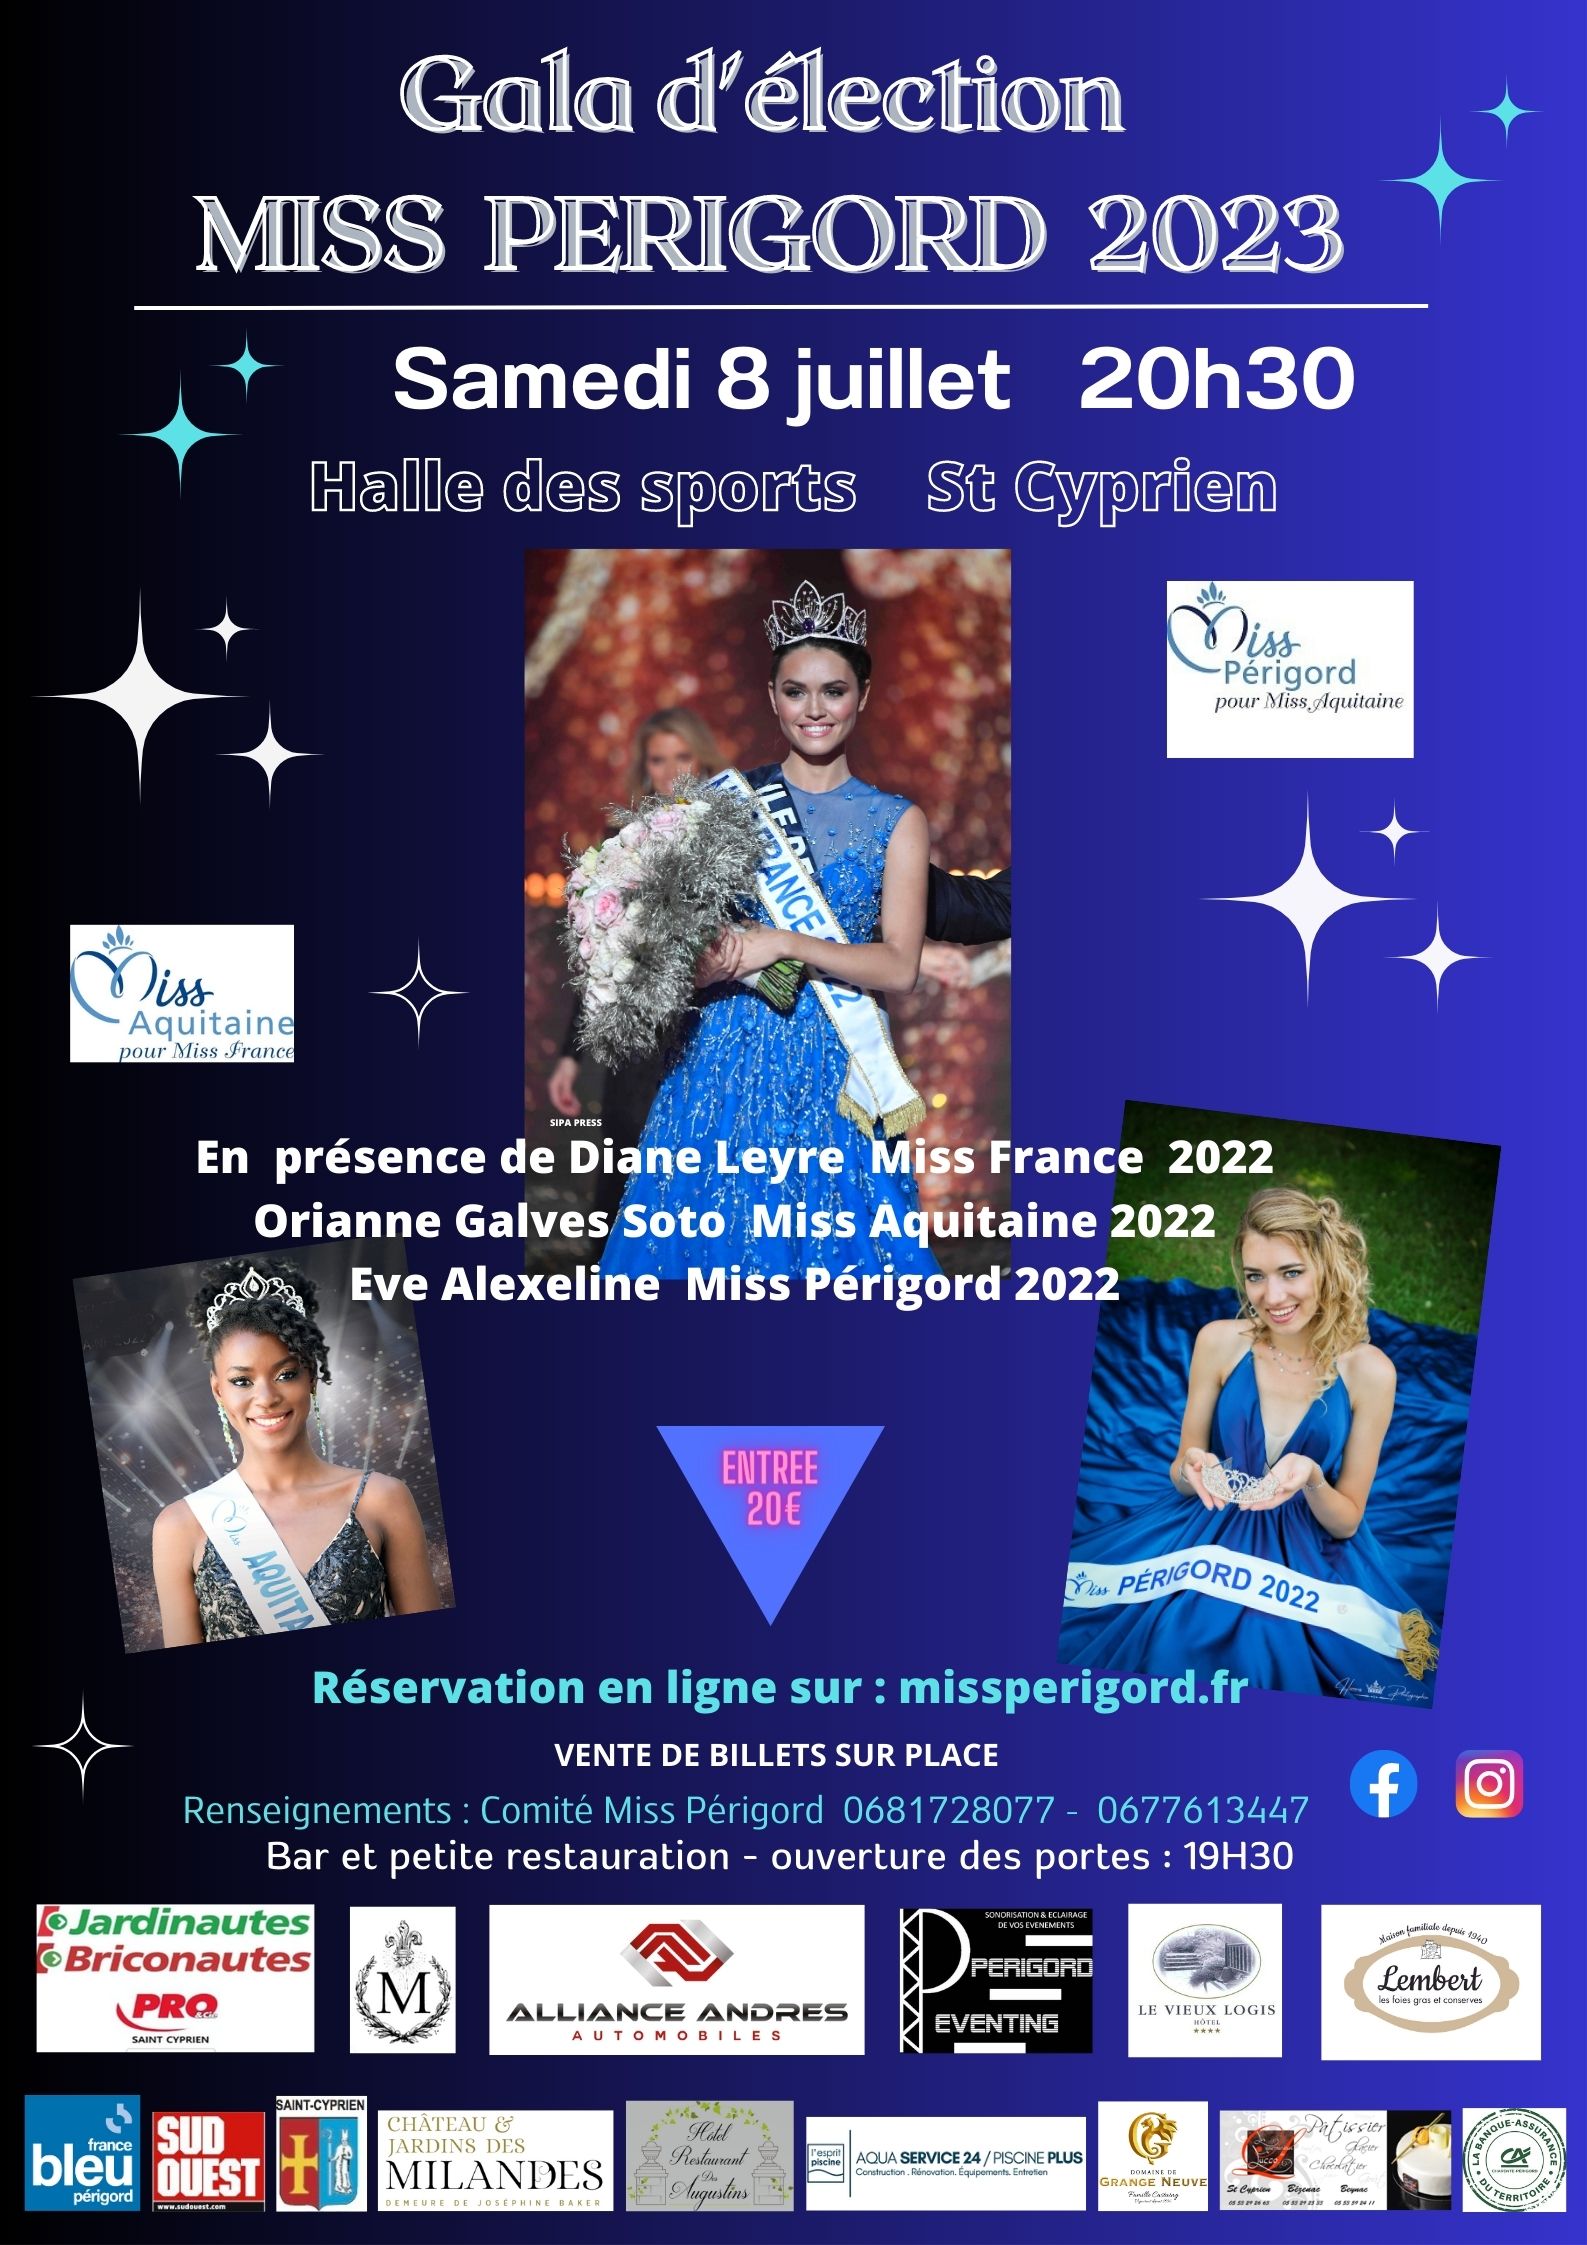 You are currently viewing Gala d’élection de Miss Périgord 2023